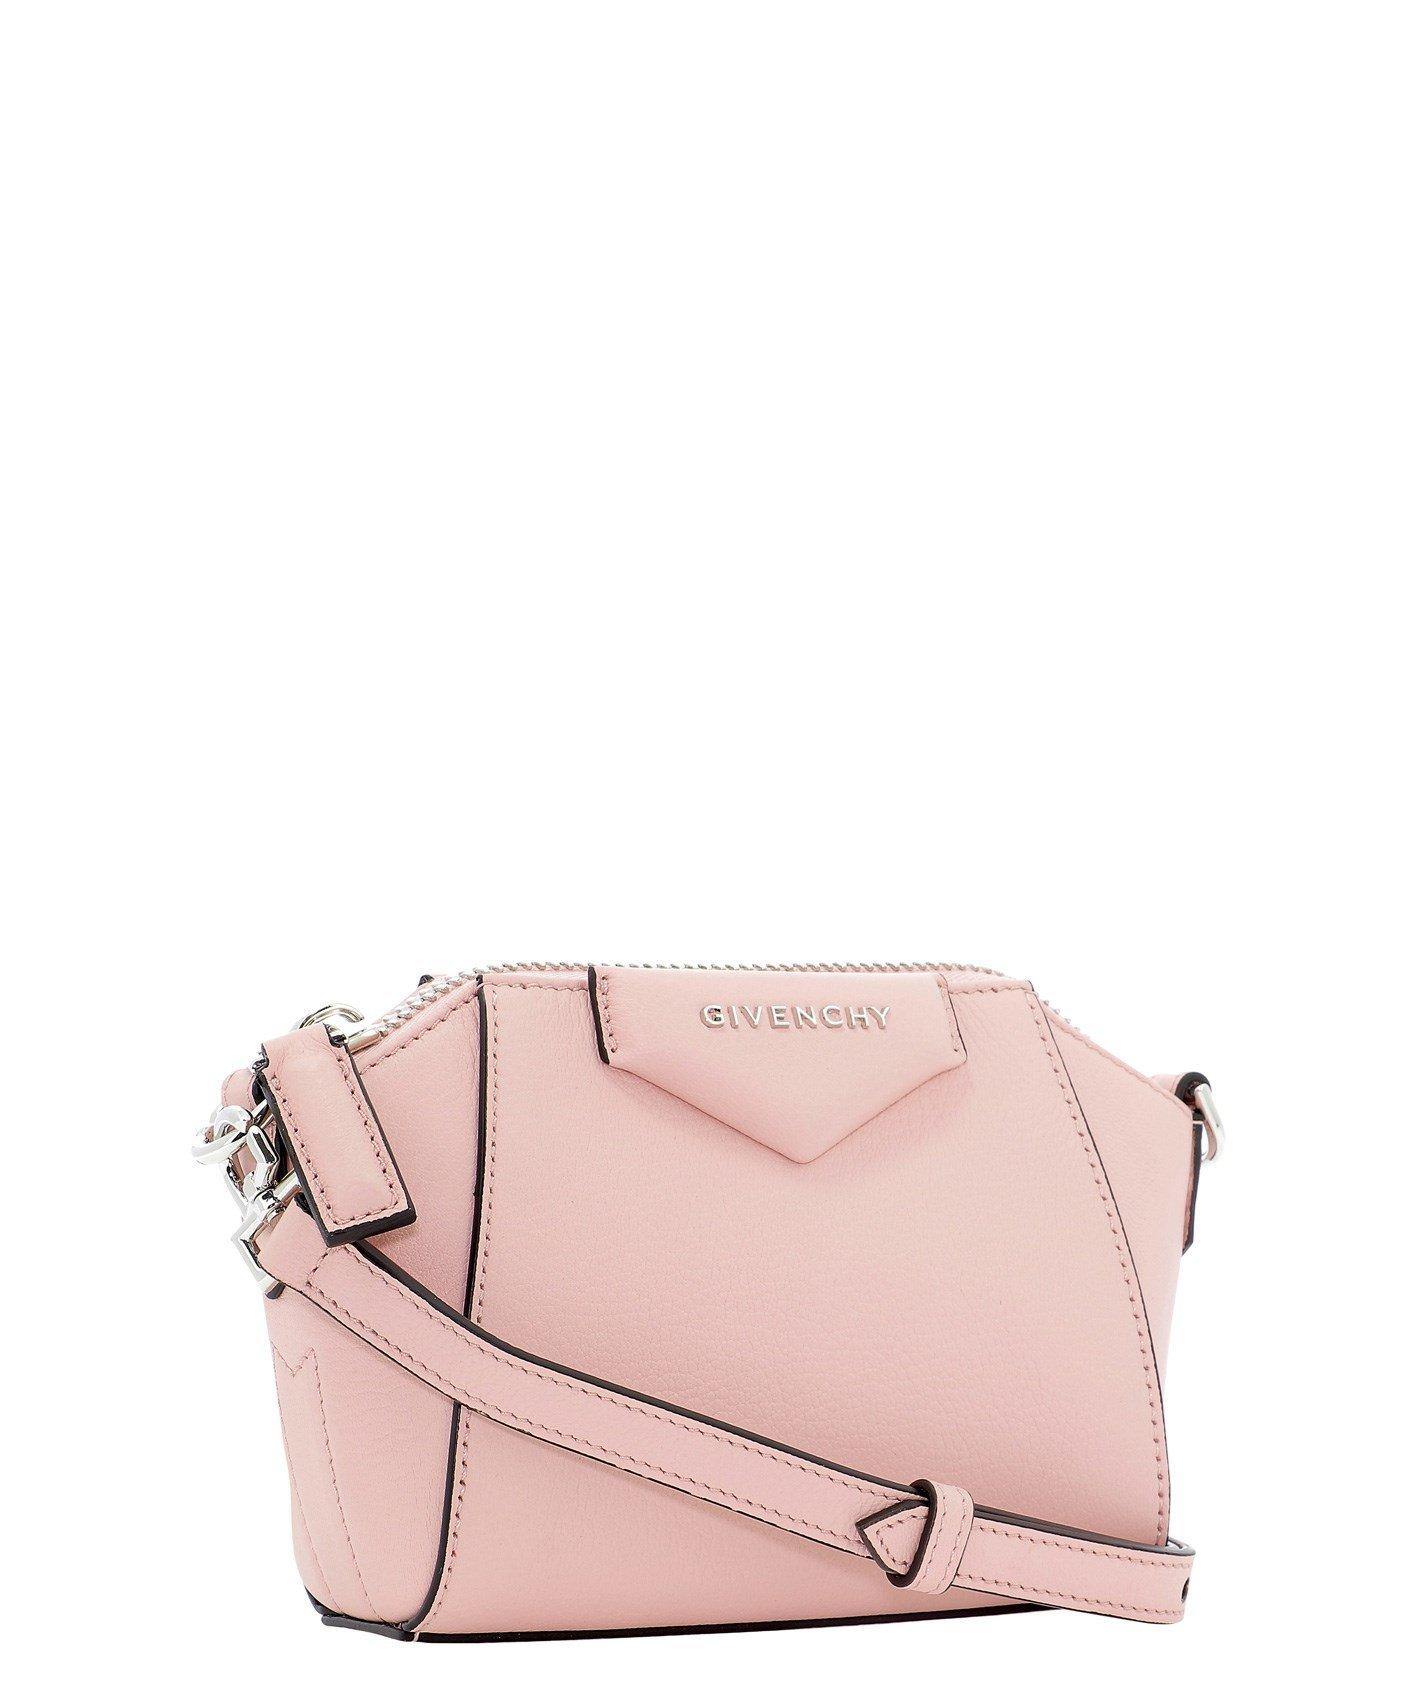 NWT Givenchy Nano Antigona Metallic Pink Leather Cross Body Bag